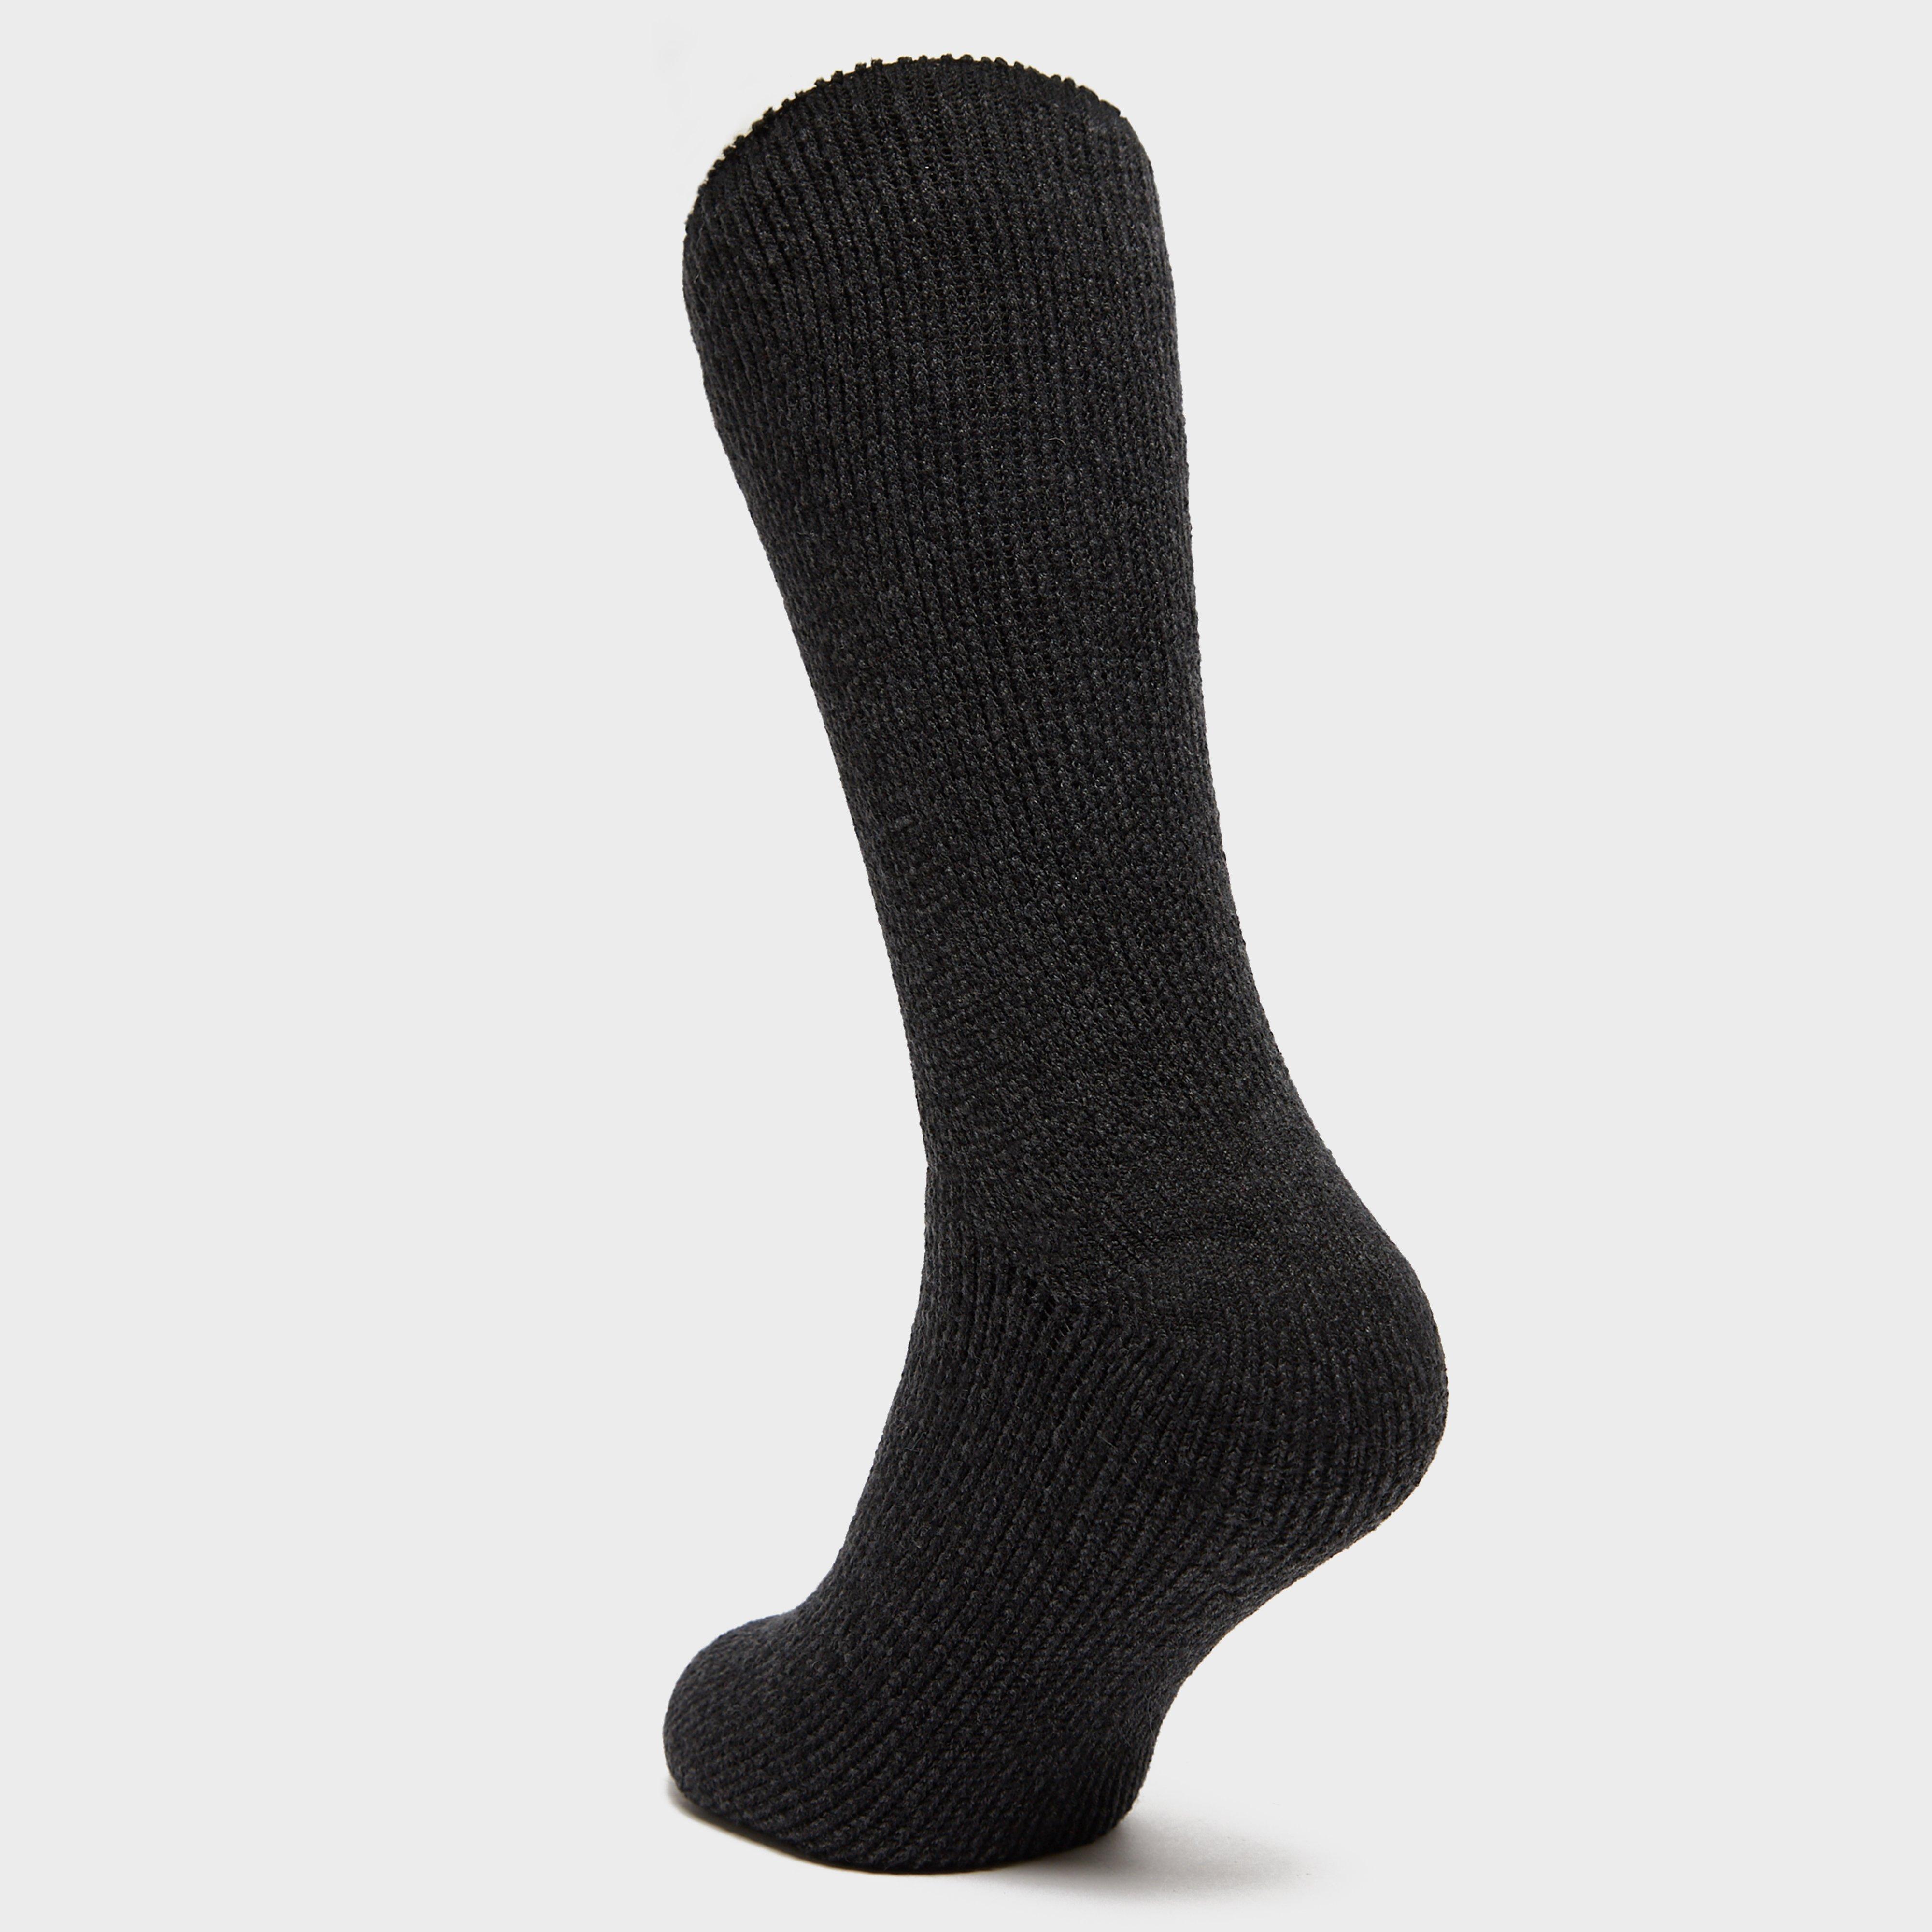 Heat Holders Men's Thermal Socks Review